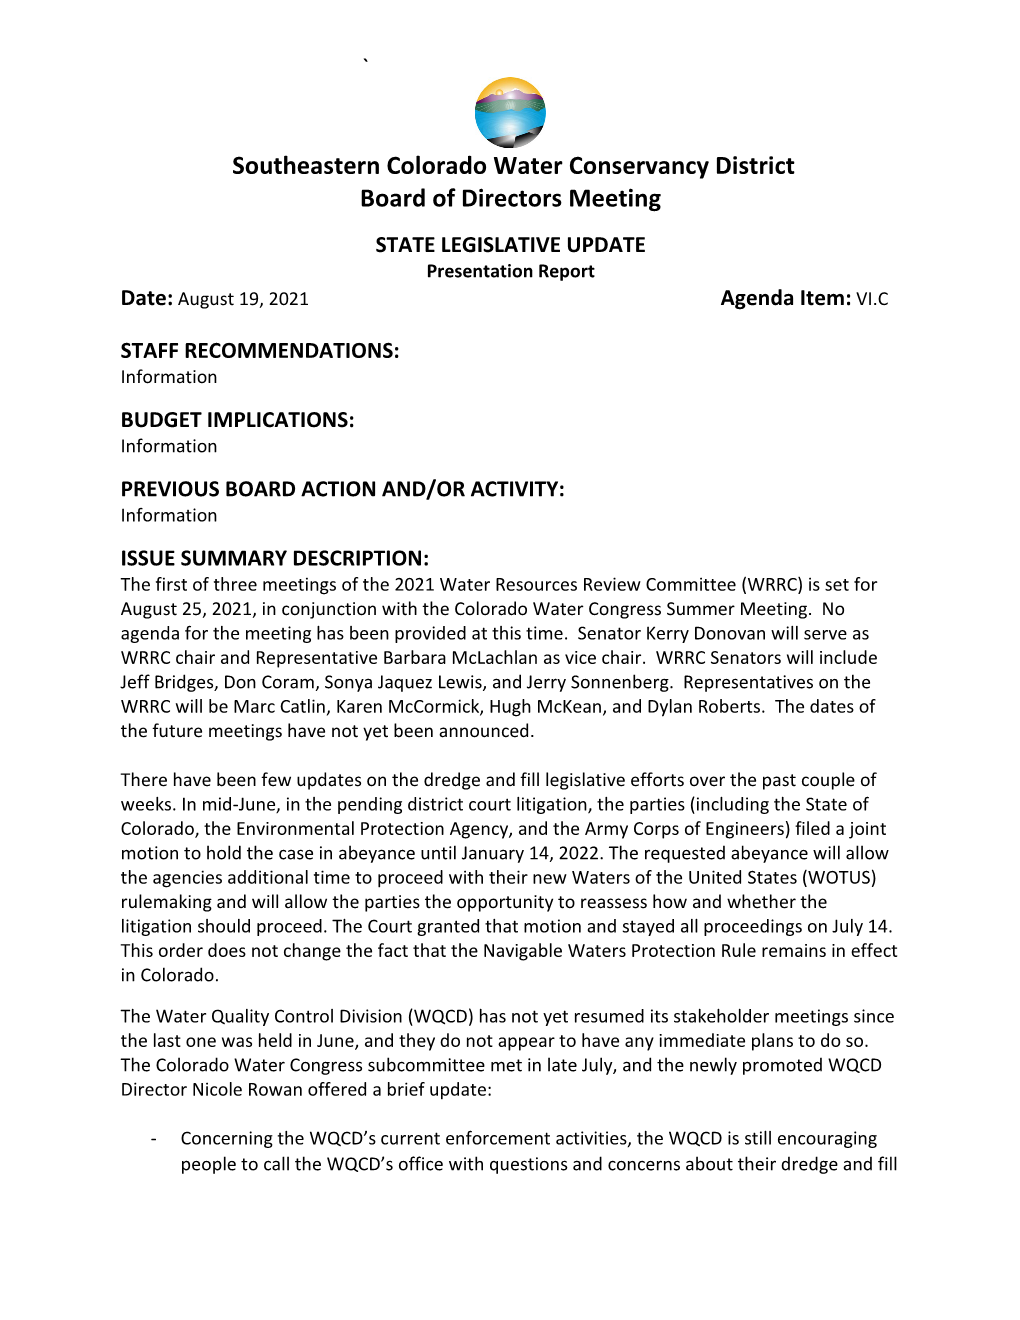 Southeastern Colorado Water Conservancy District Board of Directors Meeting STATE LEGISLATIVE UPDATE Presentation Report Date: August 19, 2021 Agenda Item: VI.C